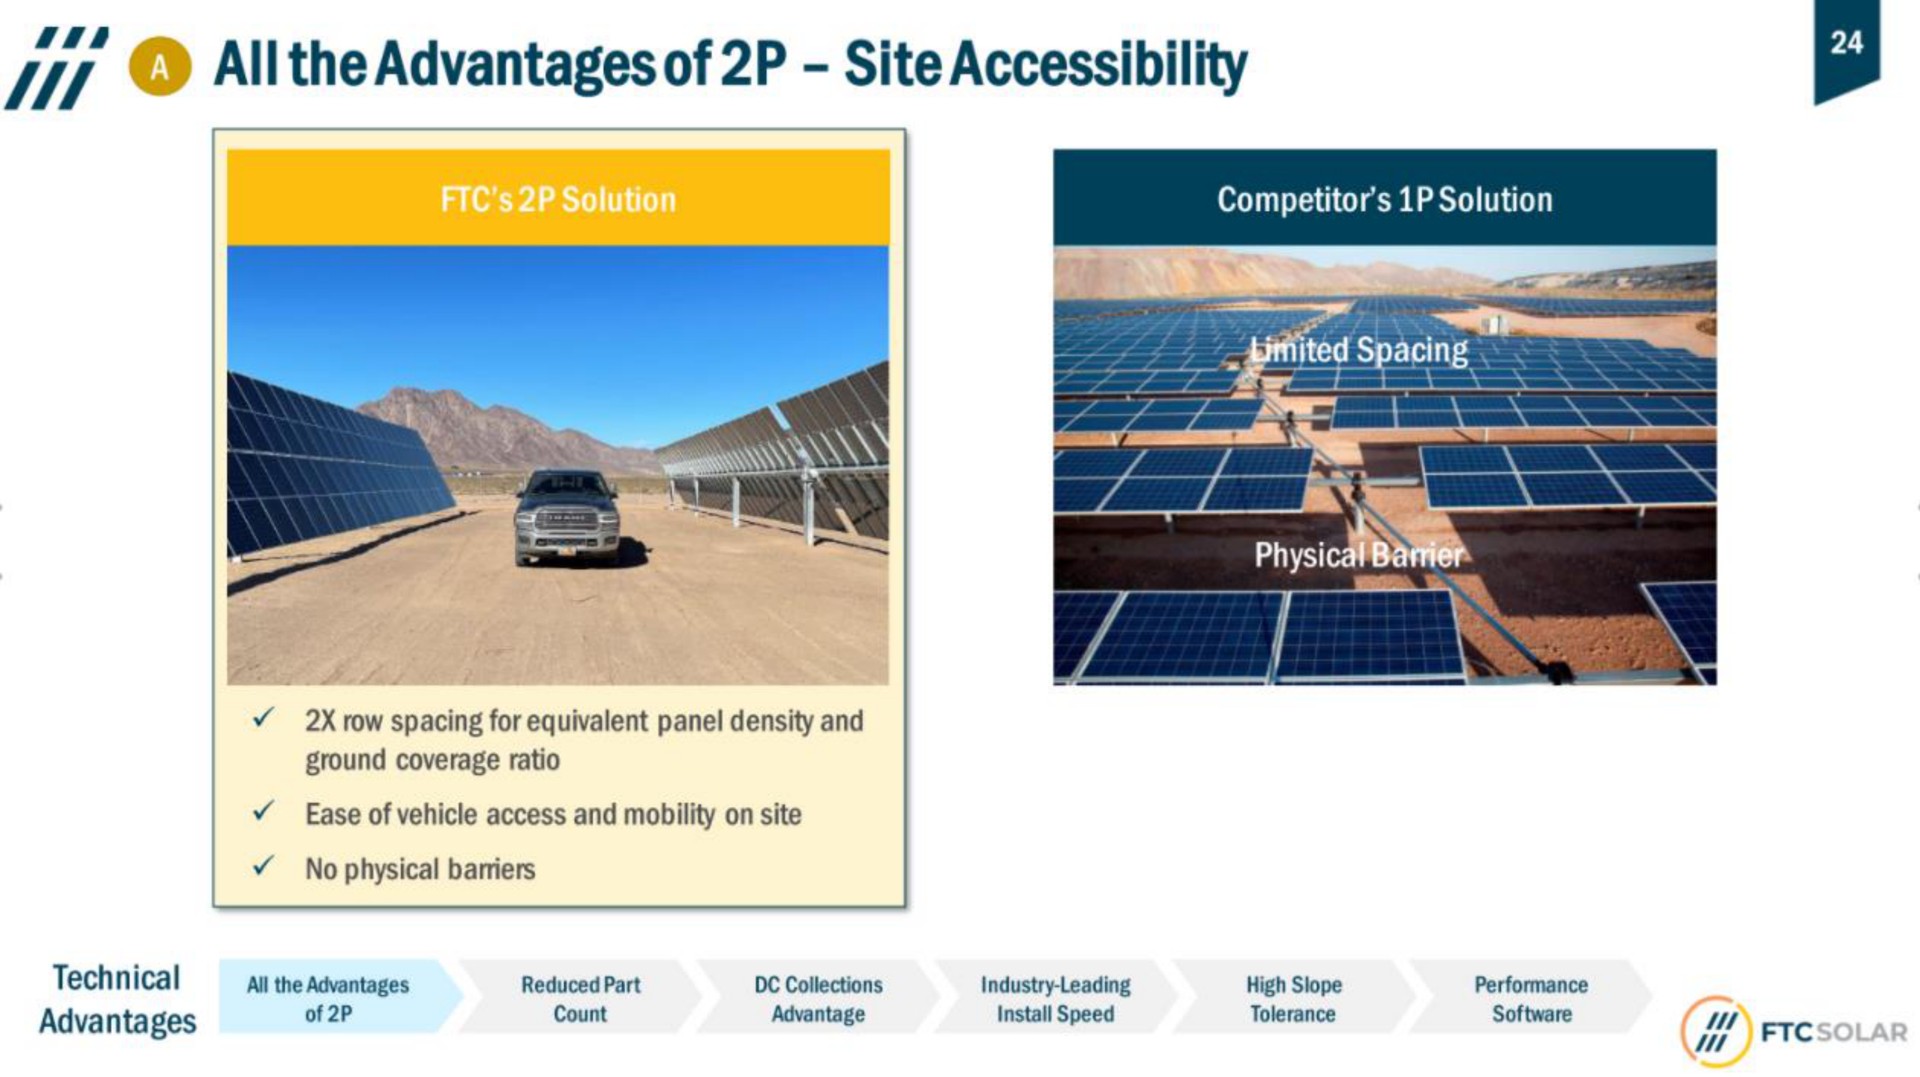 advantages of site accessibility | FTC Solar